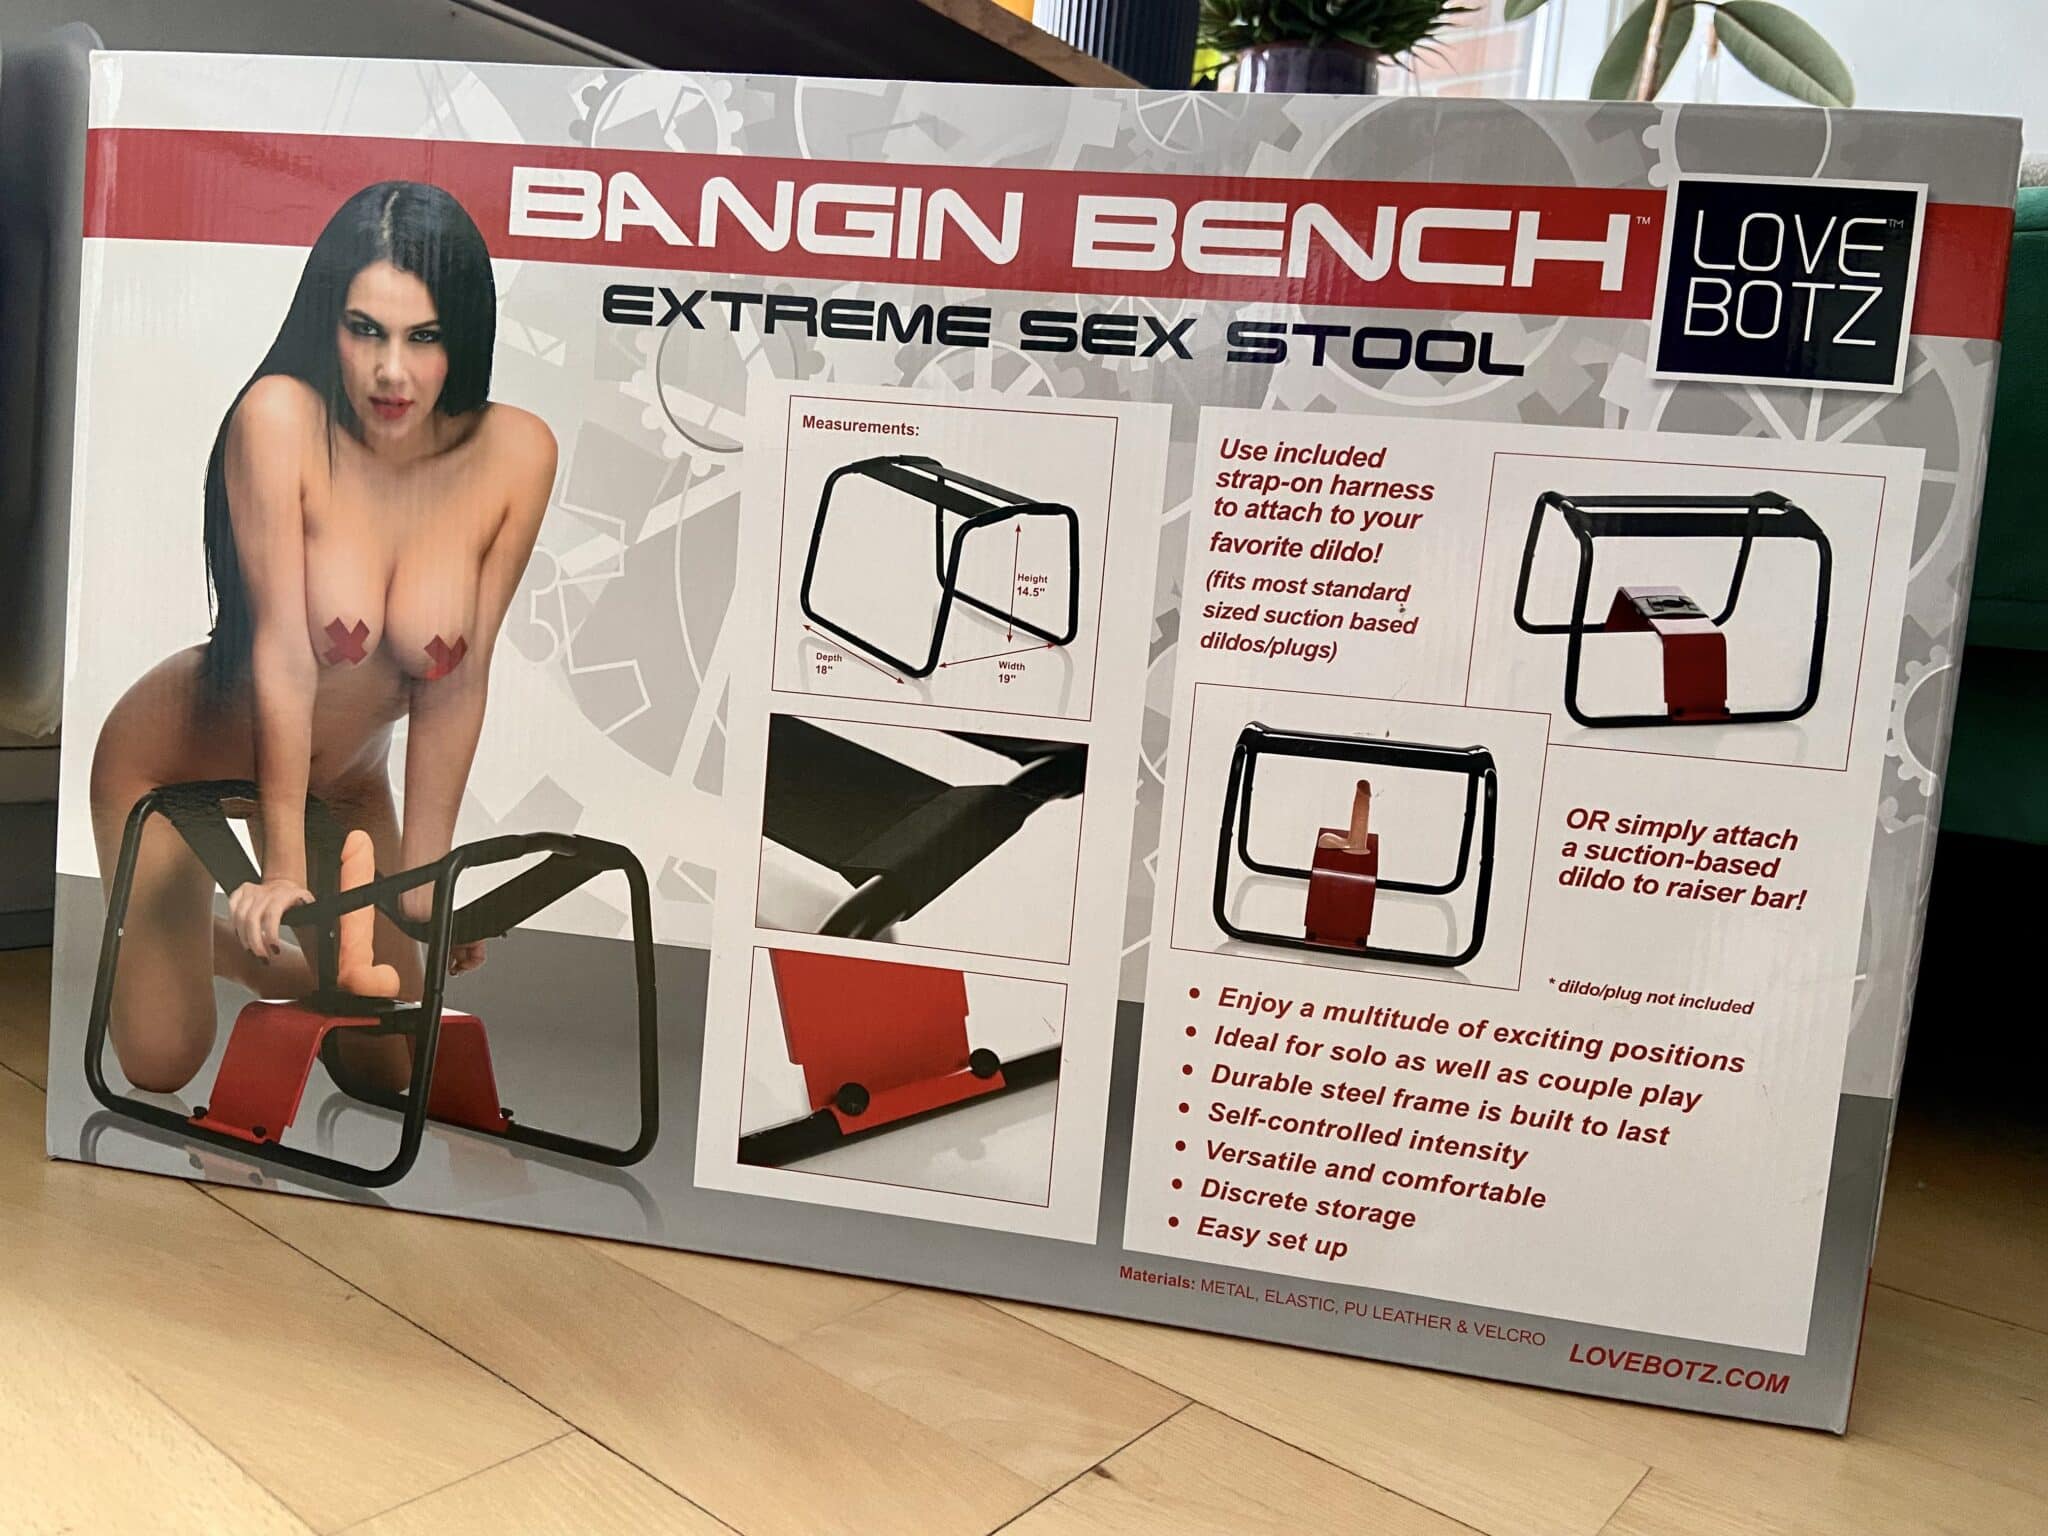 Lovebotz Bangin Bench Extreme Sex Stool Packaging of the Lovebotz Bangin Bench Extreme Sex Stool